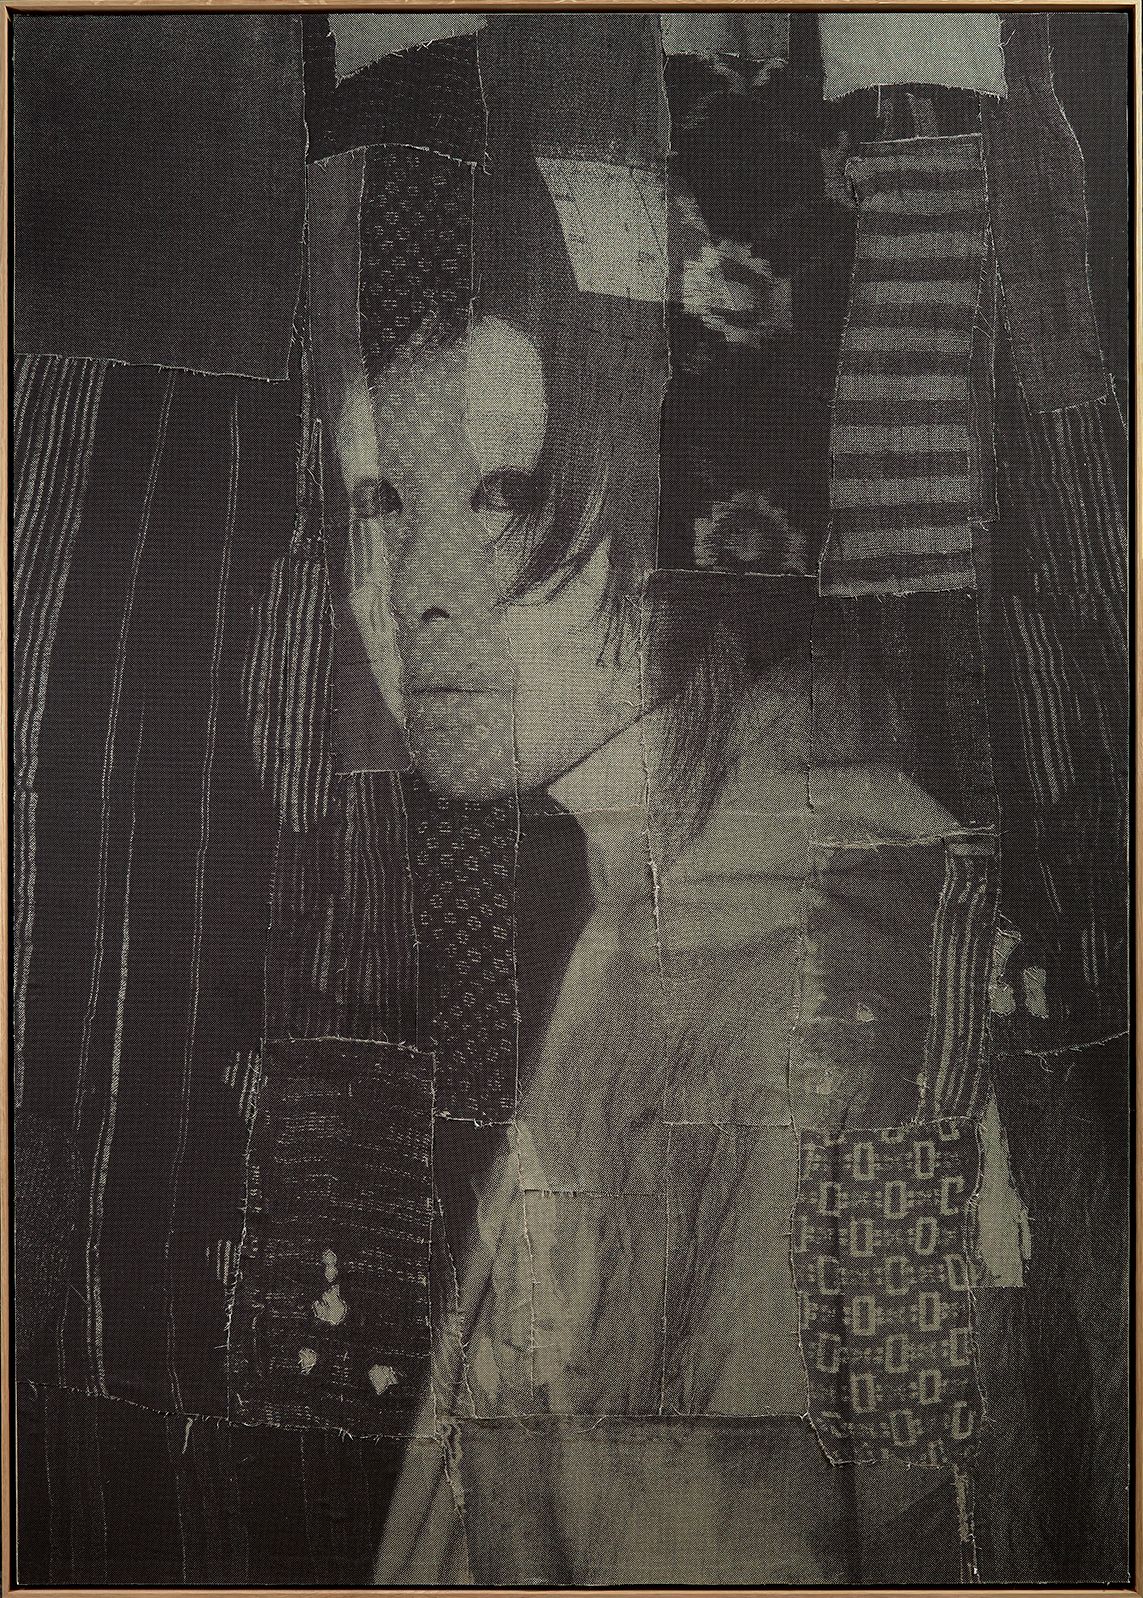 David Noonan, Untitled, 2013, silkscreen on linen collage, 80 × 57 in.